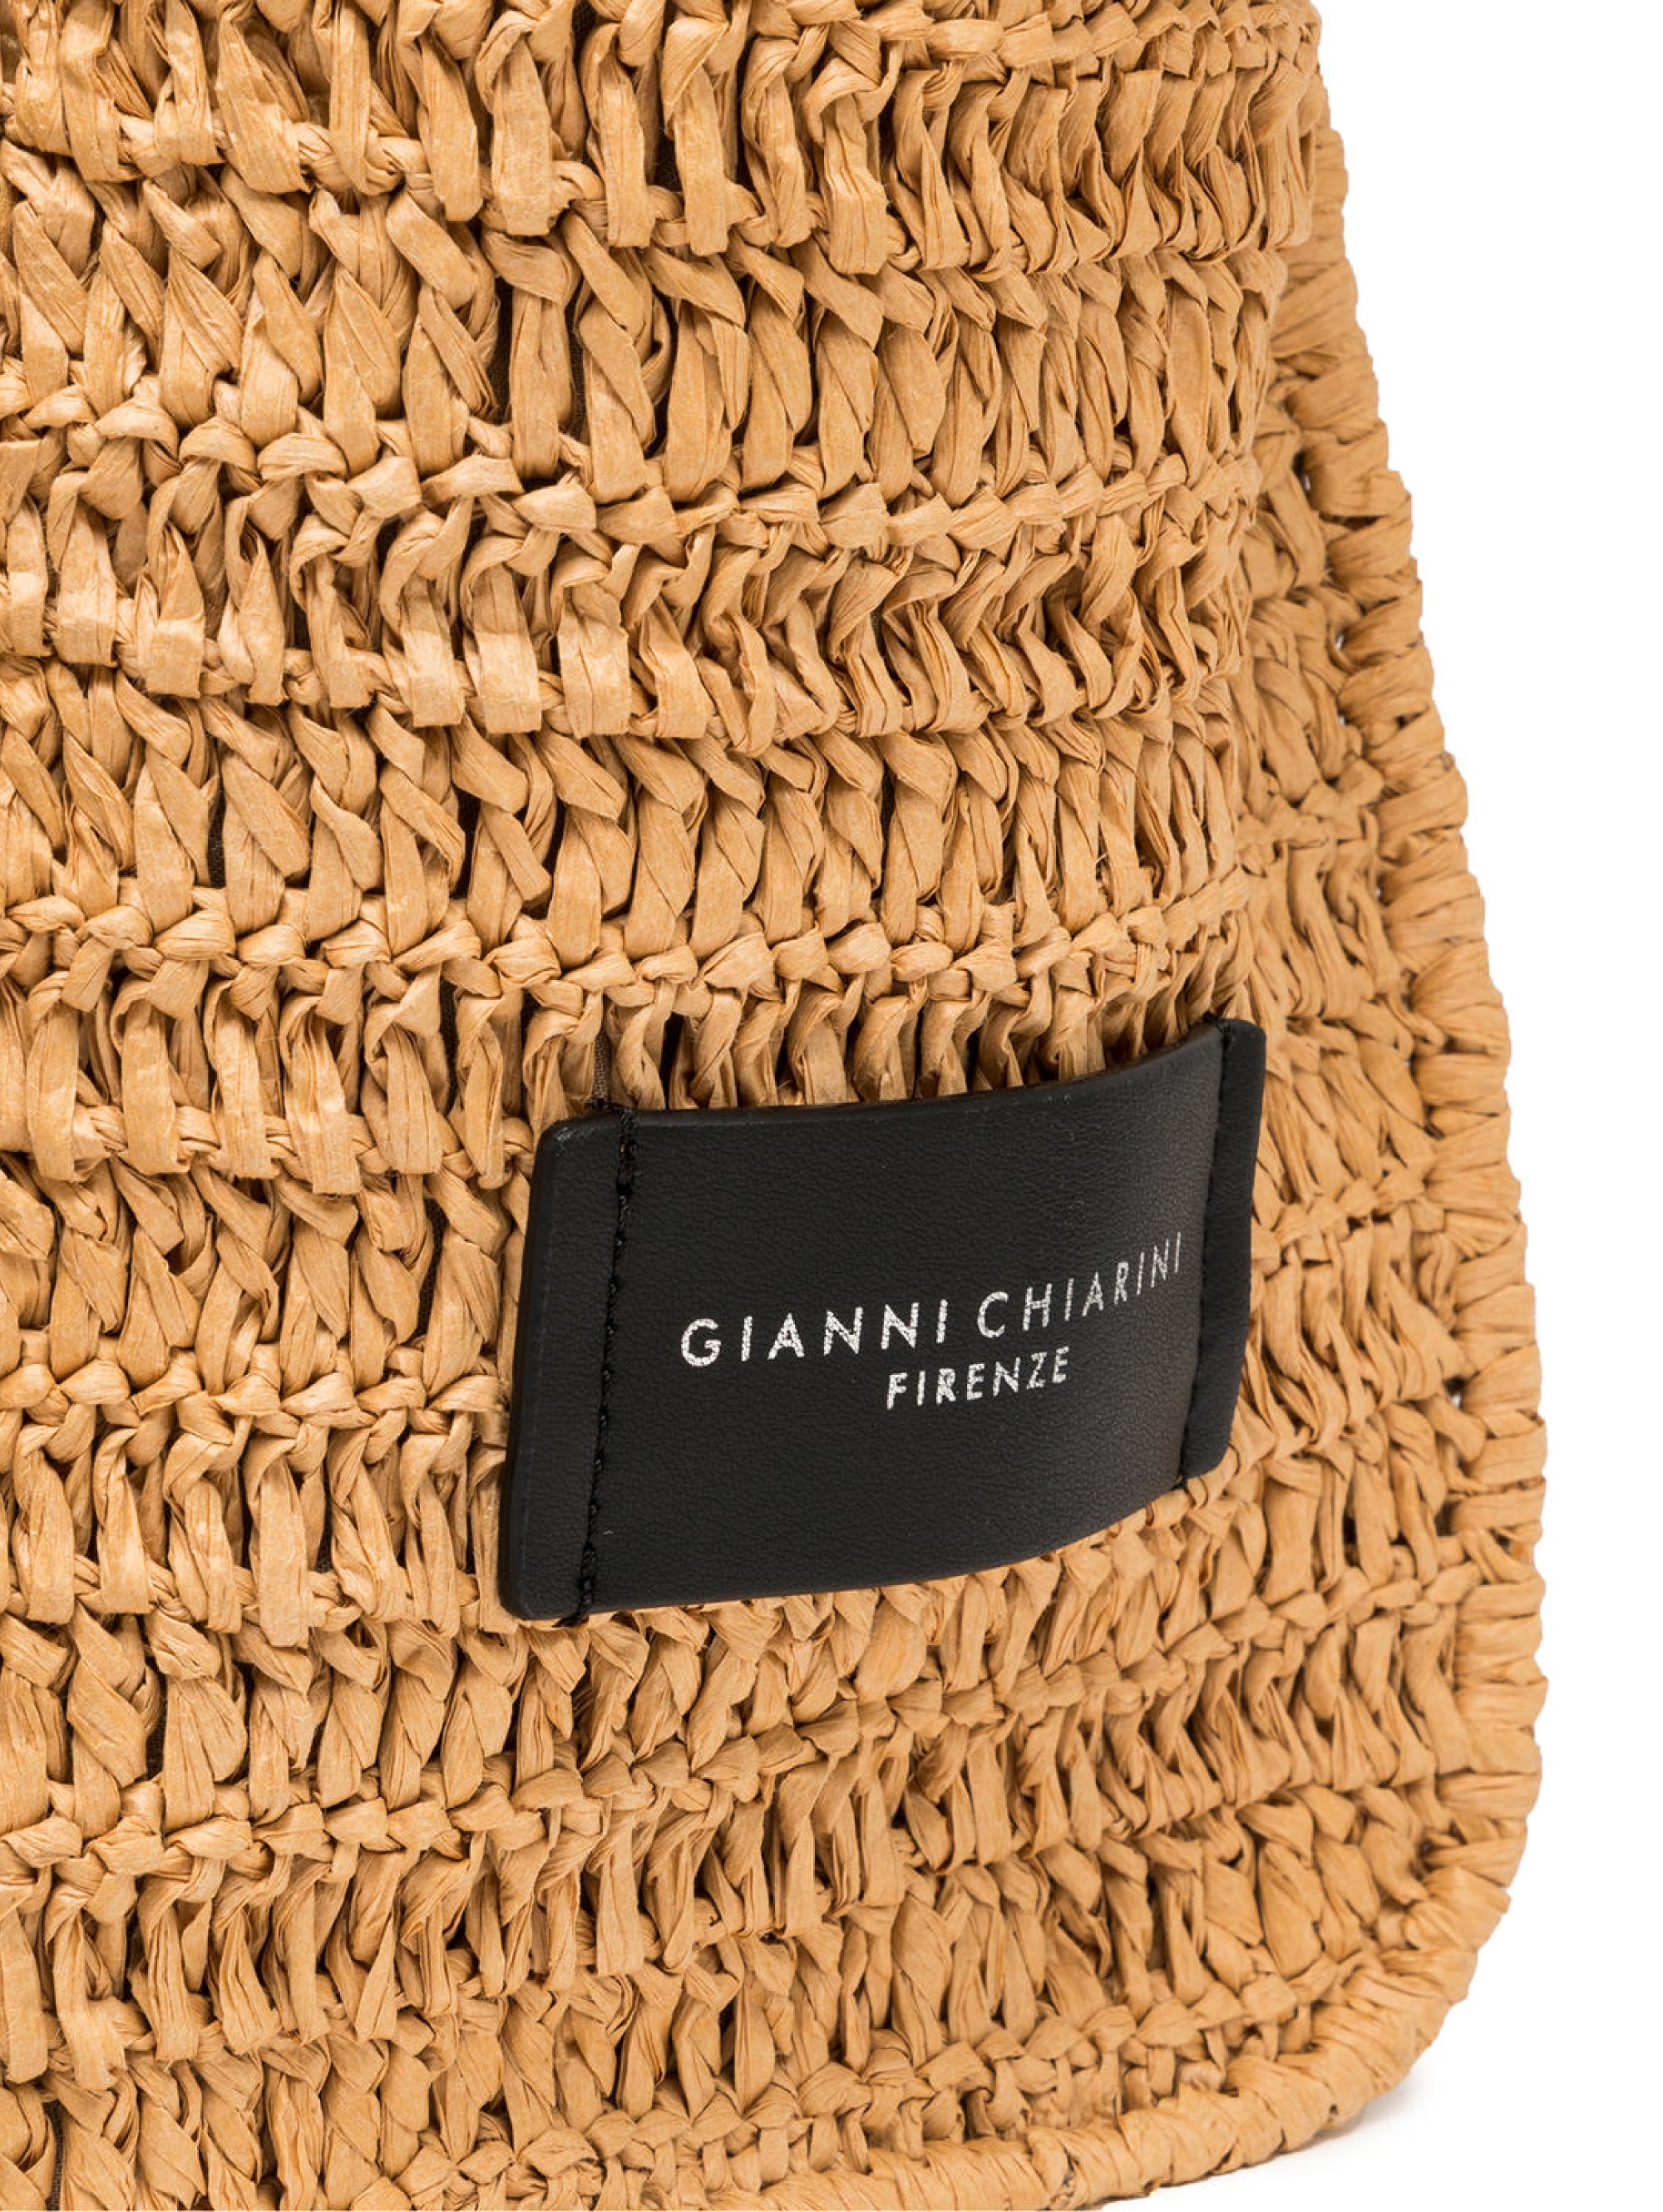 Straw Bag with Black Crochet Work